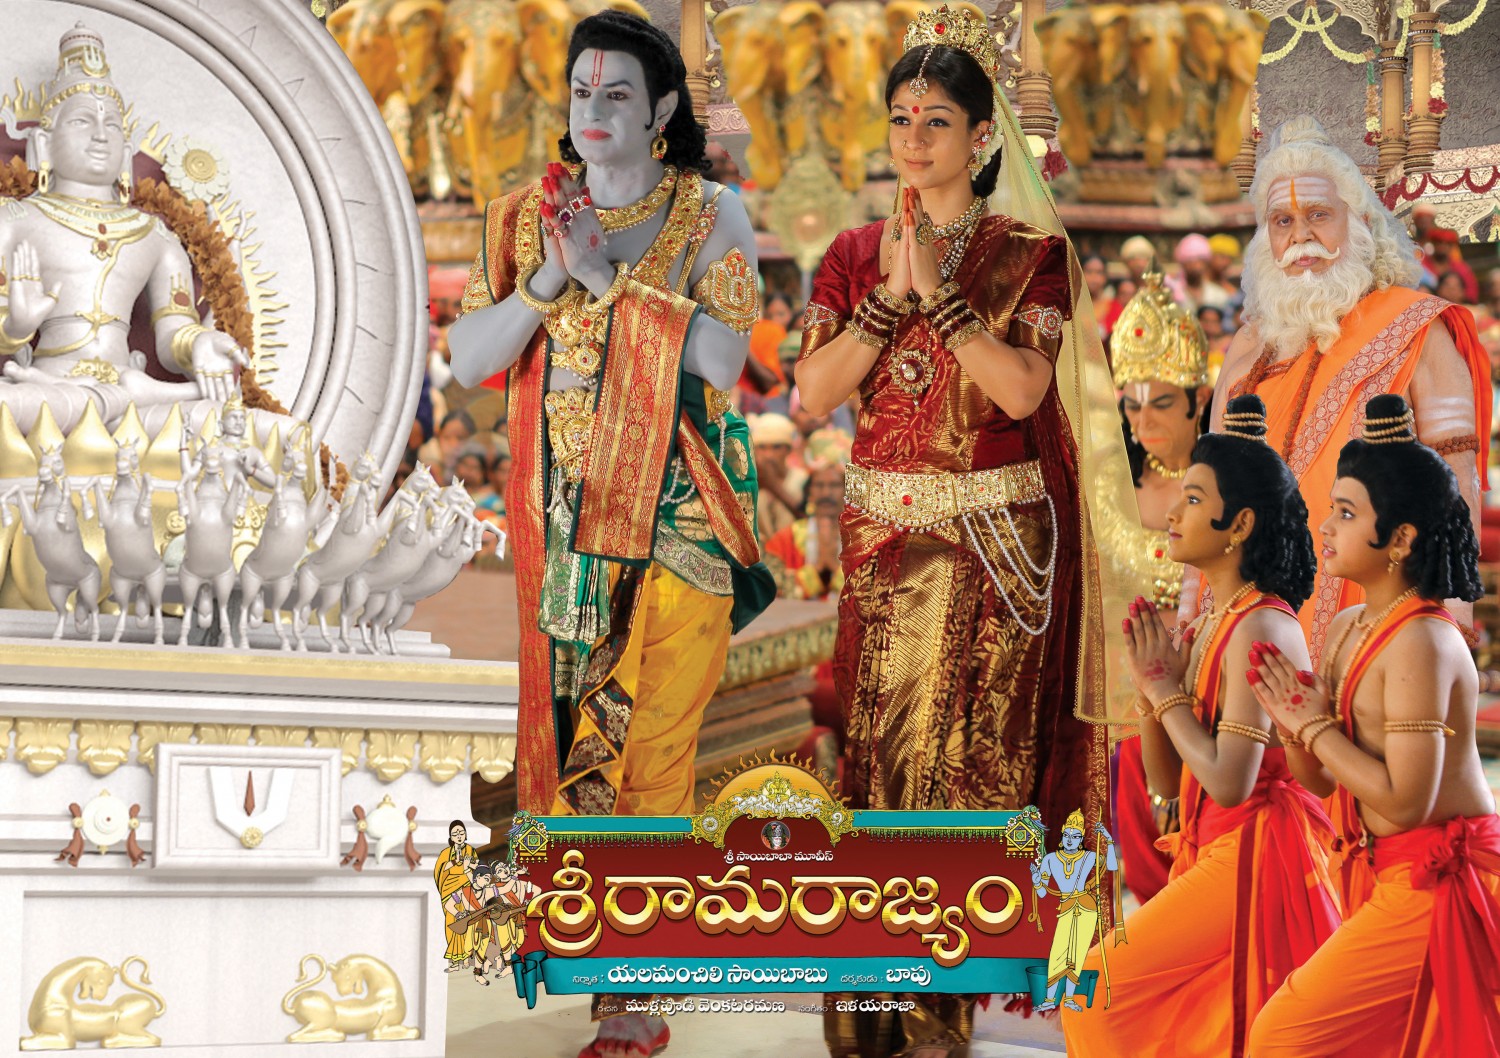 Extra Large Movie Poster Image for Sri Rama Rajyam (#7 of 10)